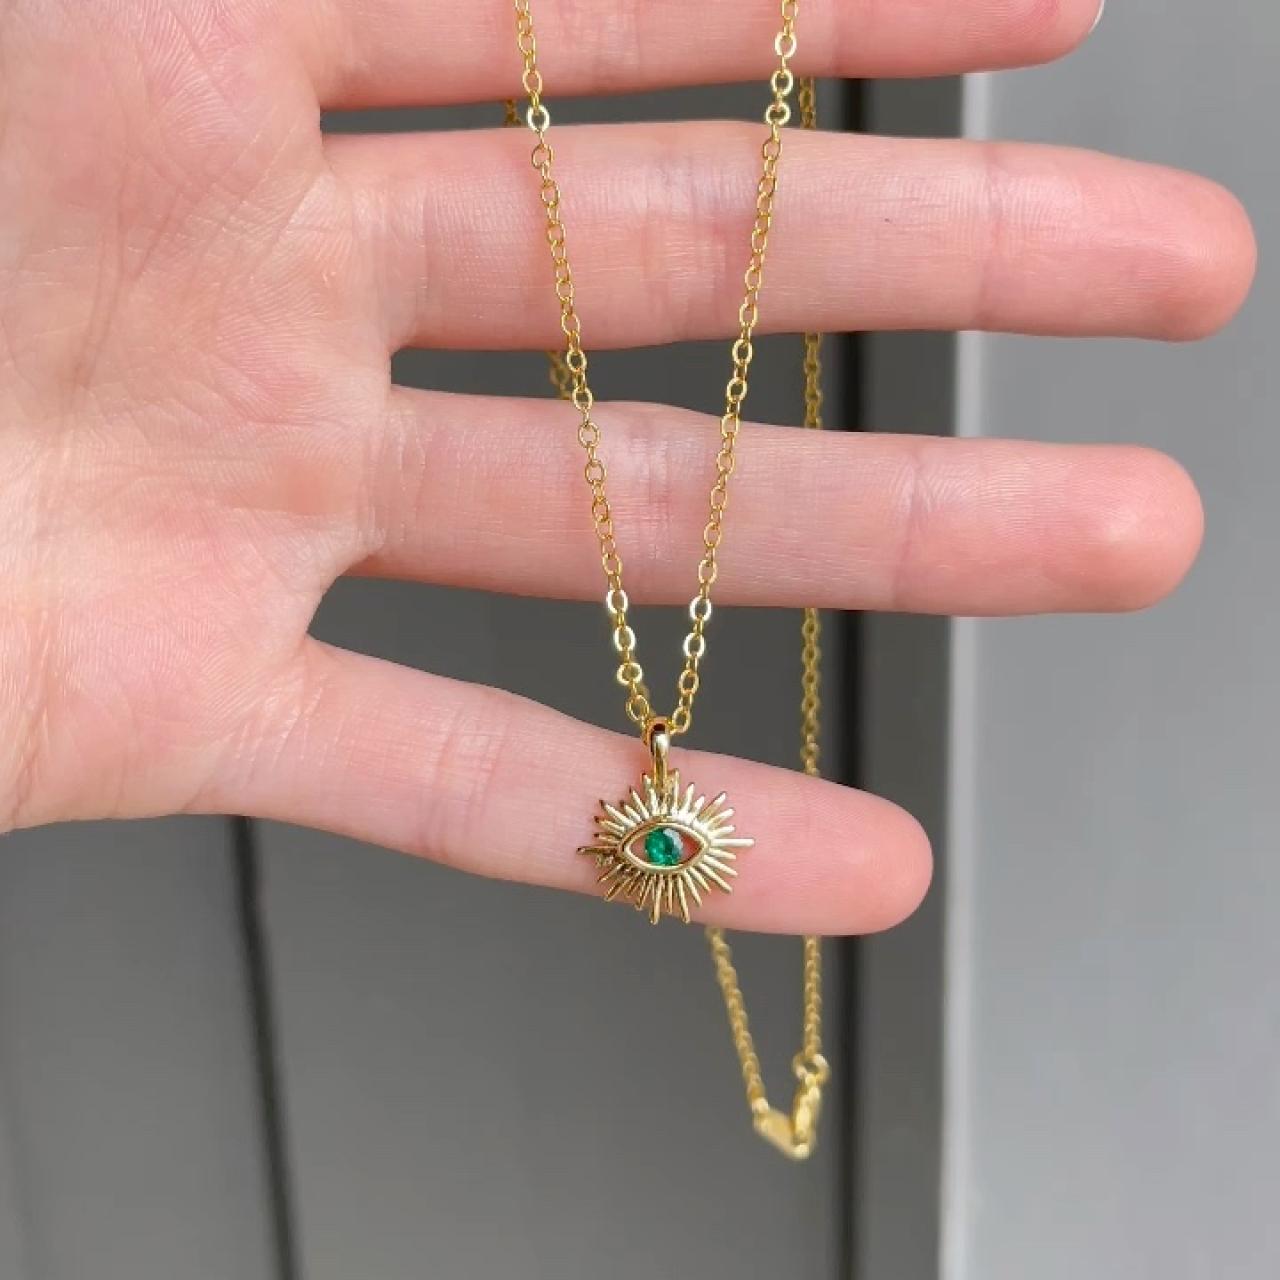 Gold Star Evil Eye Charm Necklace Chain Pendant - Depop